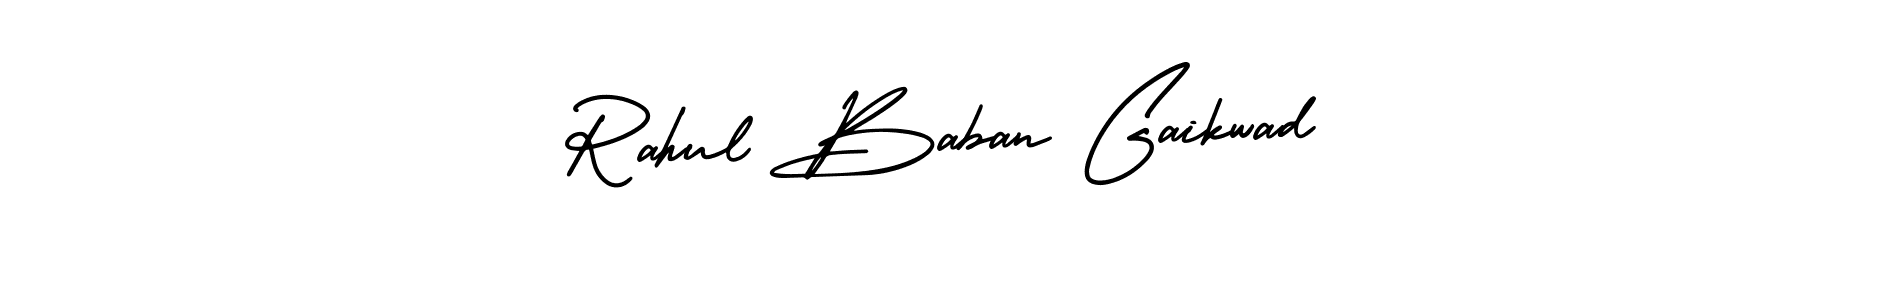 Best and Professional Signature Style for Rahul Baban Gaikwad. AmerikaSignatureDemo-Regular Best Signature Style Collection. Rahul Baban Gaikwad signature style 3 images and pictures png